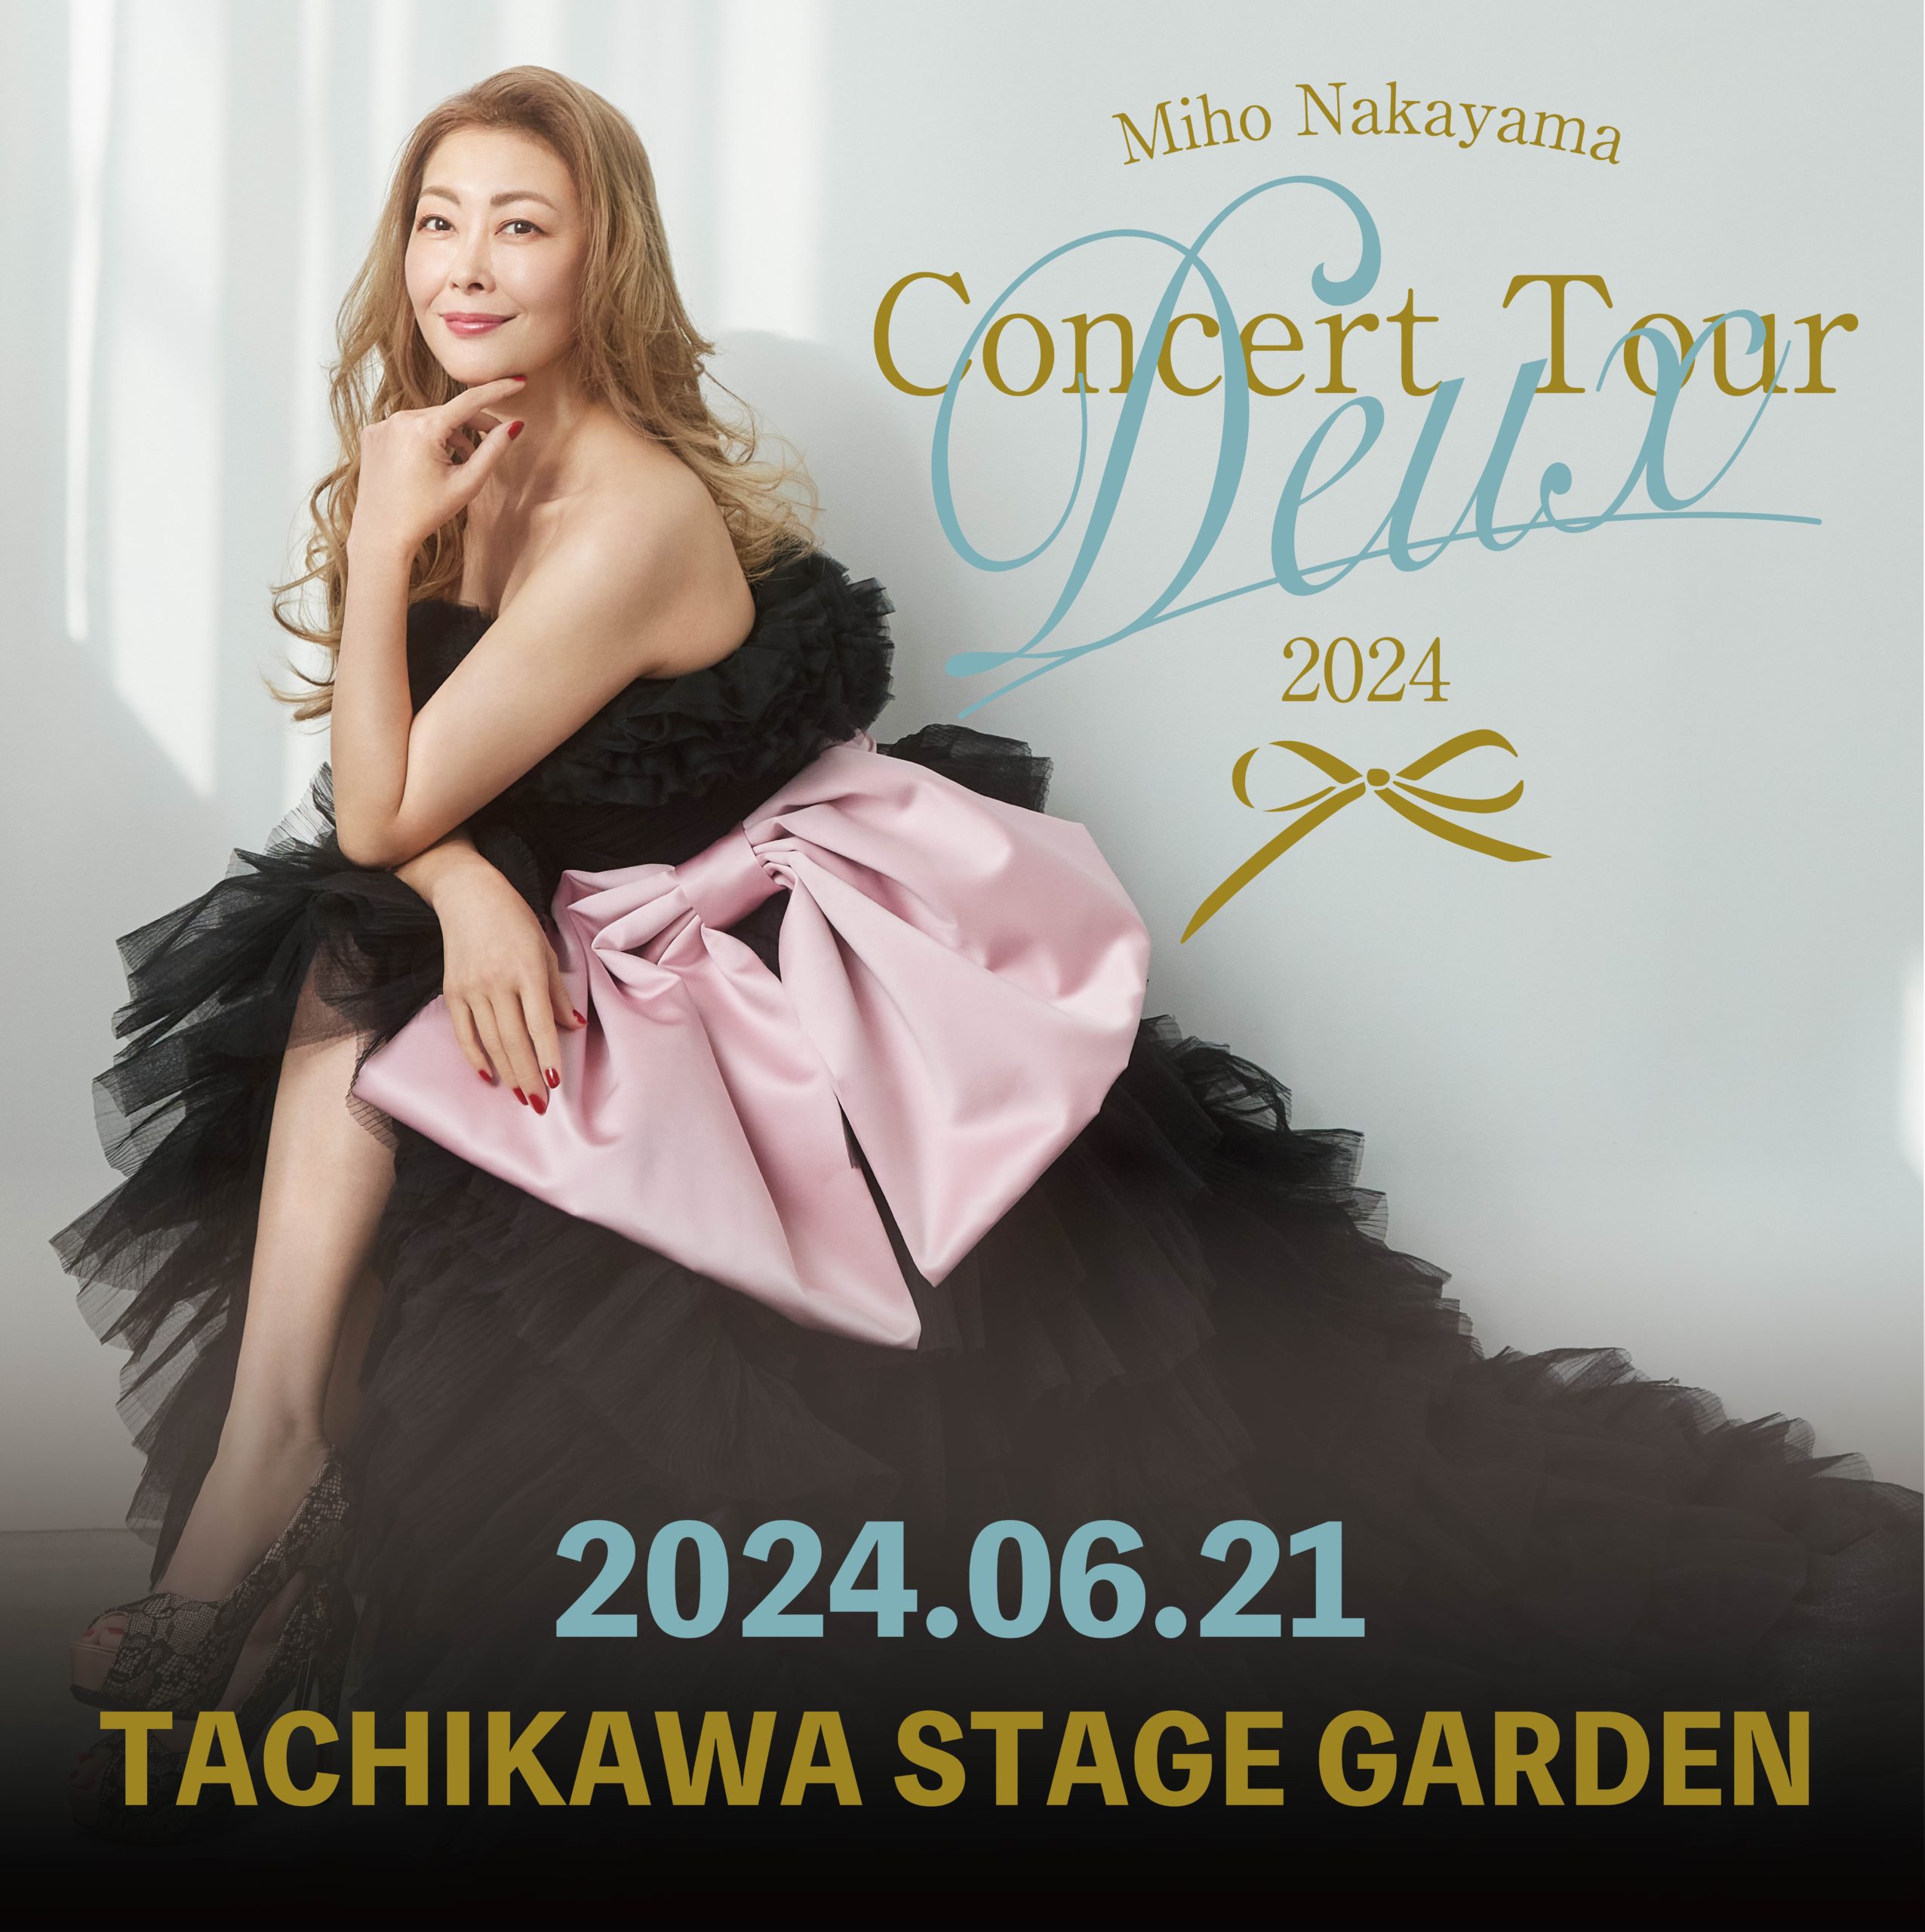 Miho Nakayama Concert Tour 2024 -Deux-